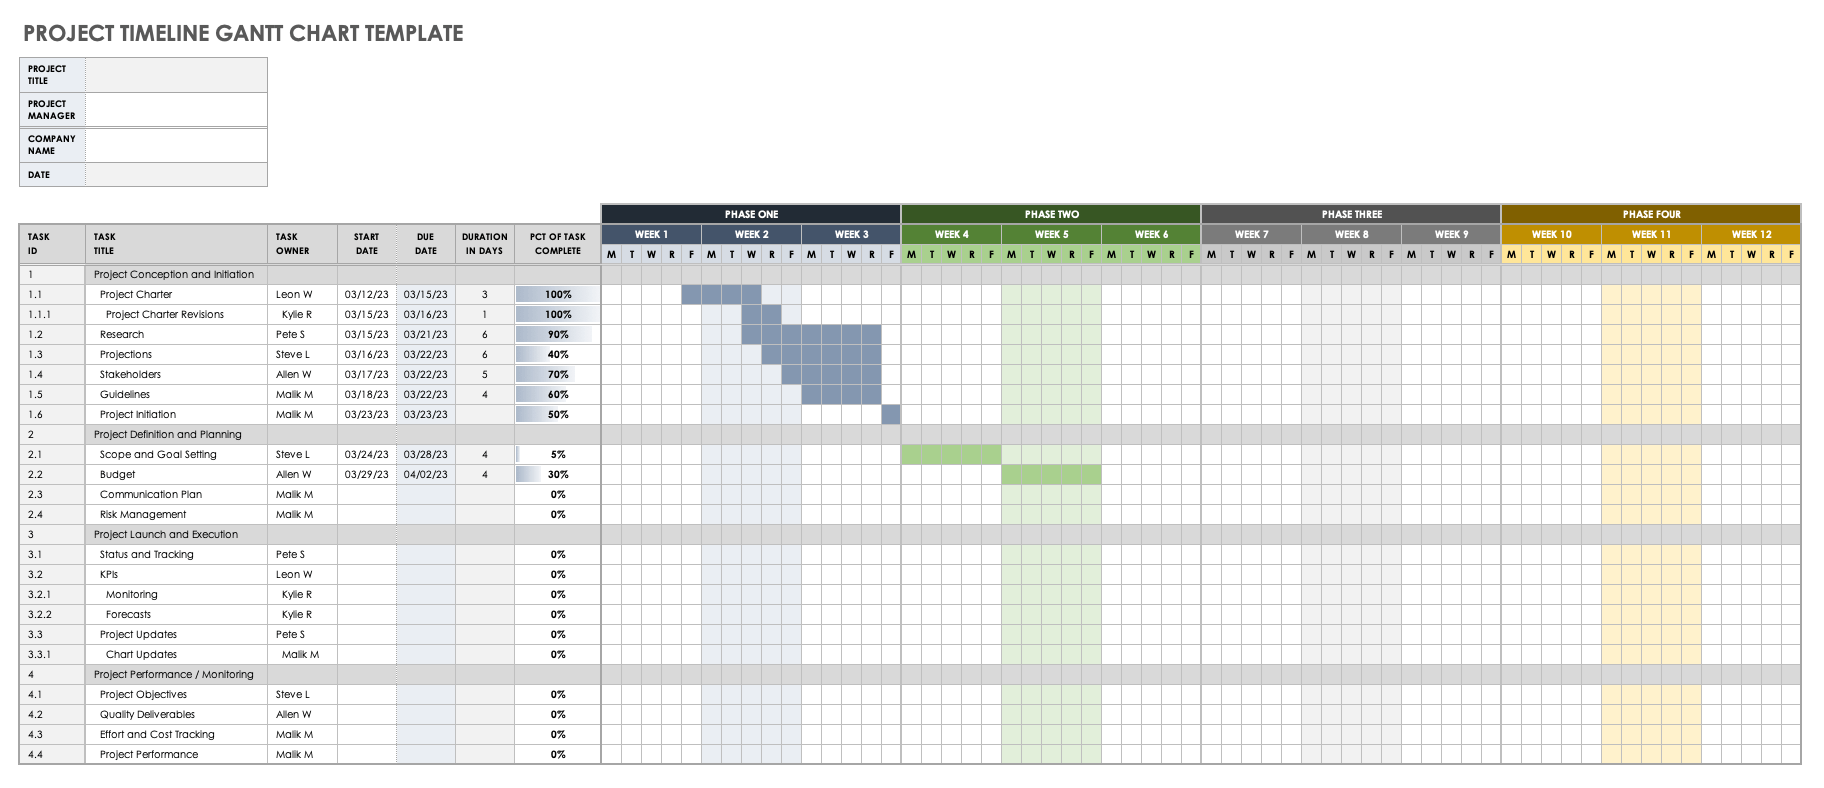 Project Timeline Gantt Chart Template Excel